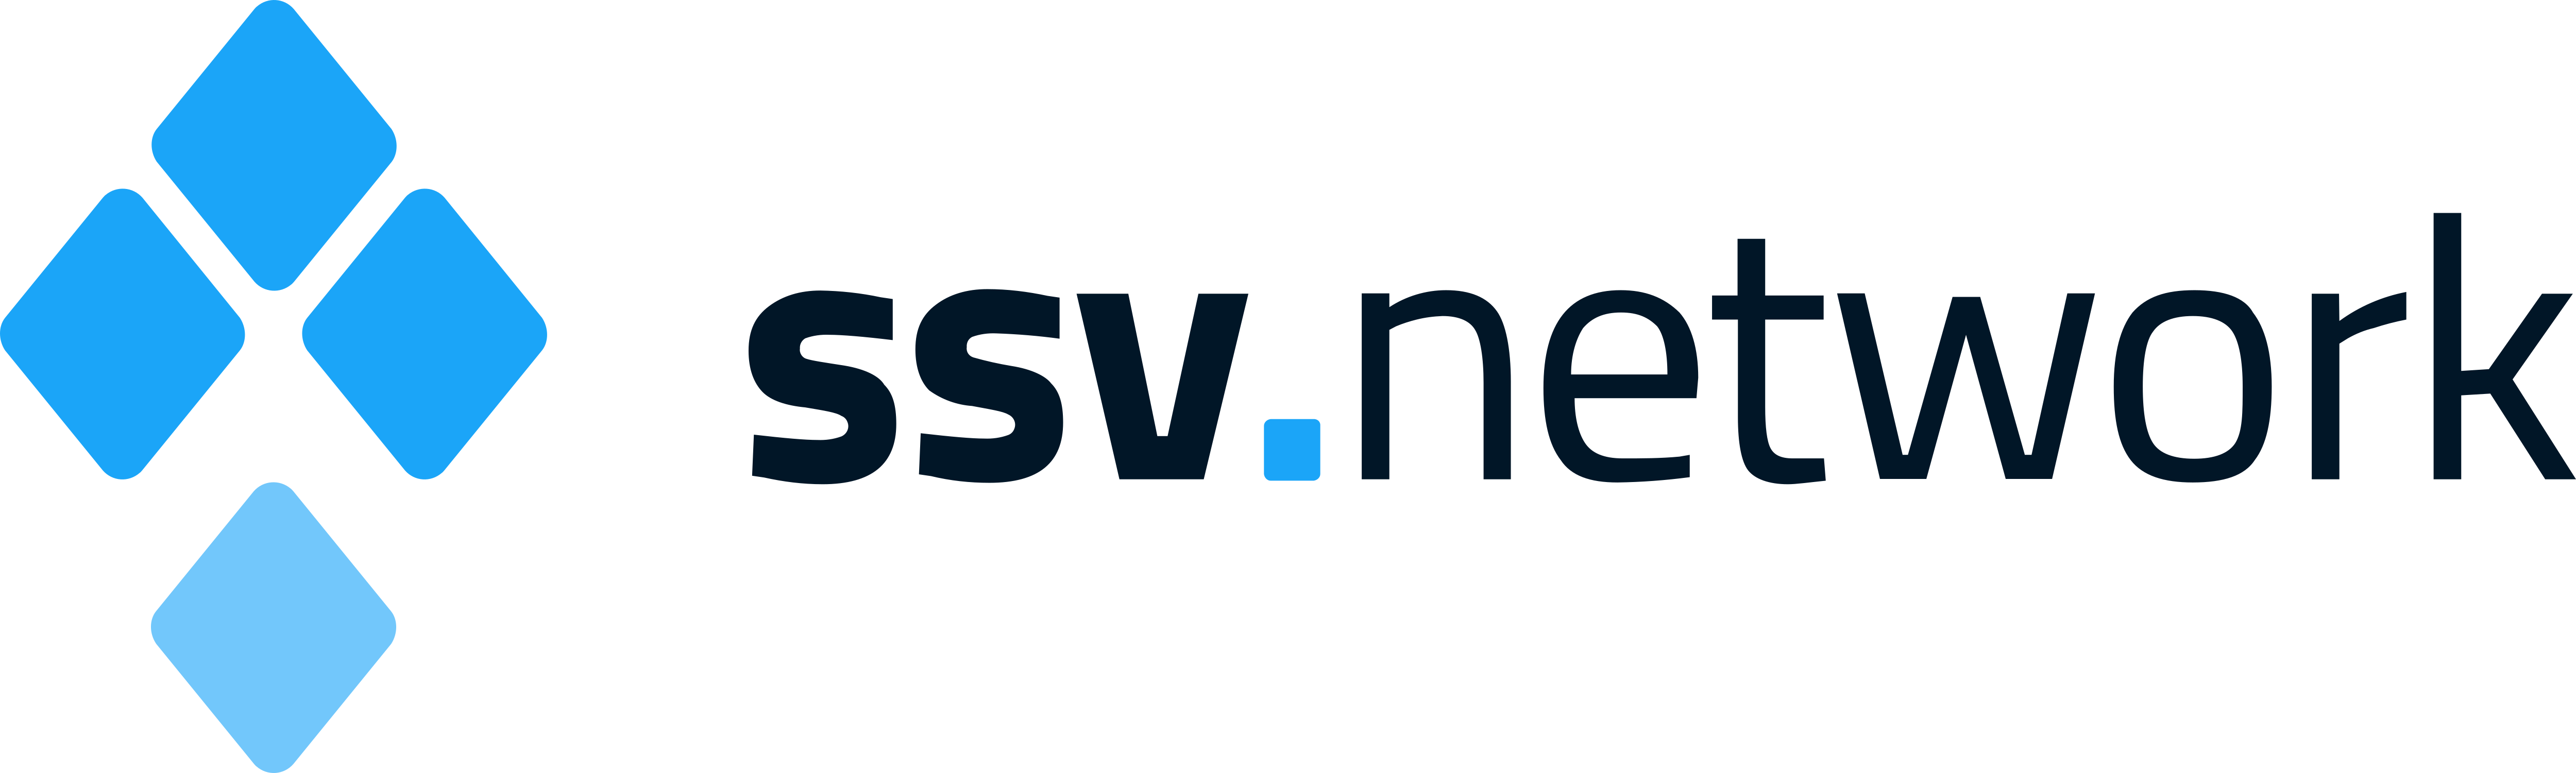 Https ssv uz. Нетворкинг логотип. NCCN логотип. SSV картинки. SL-4440-SSV.